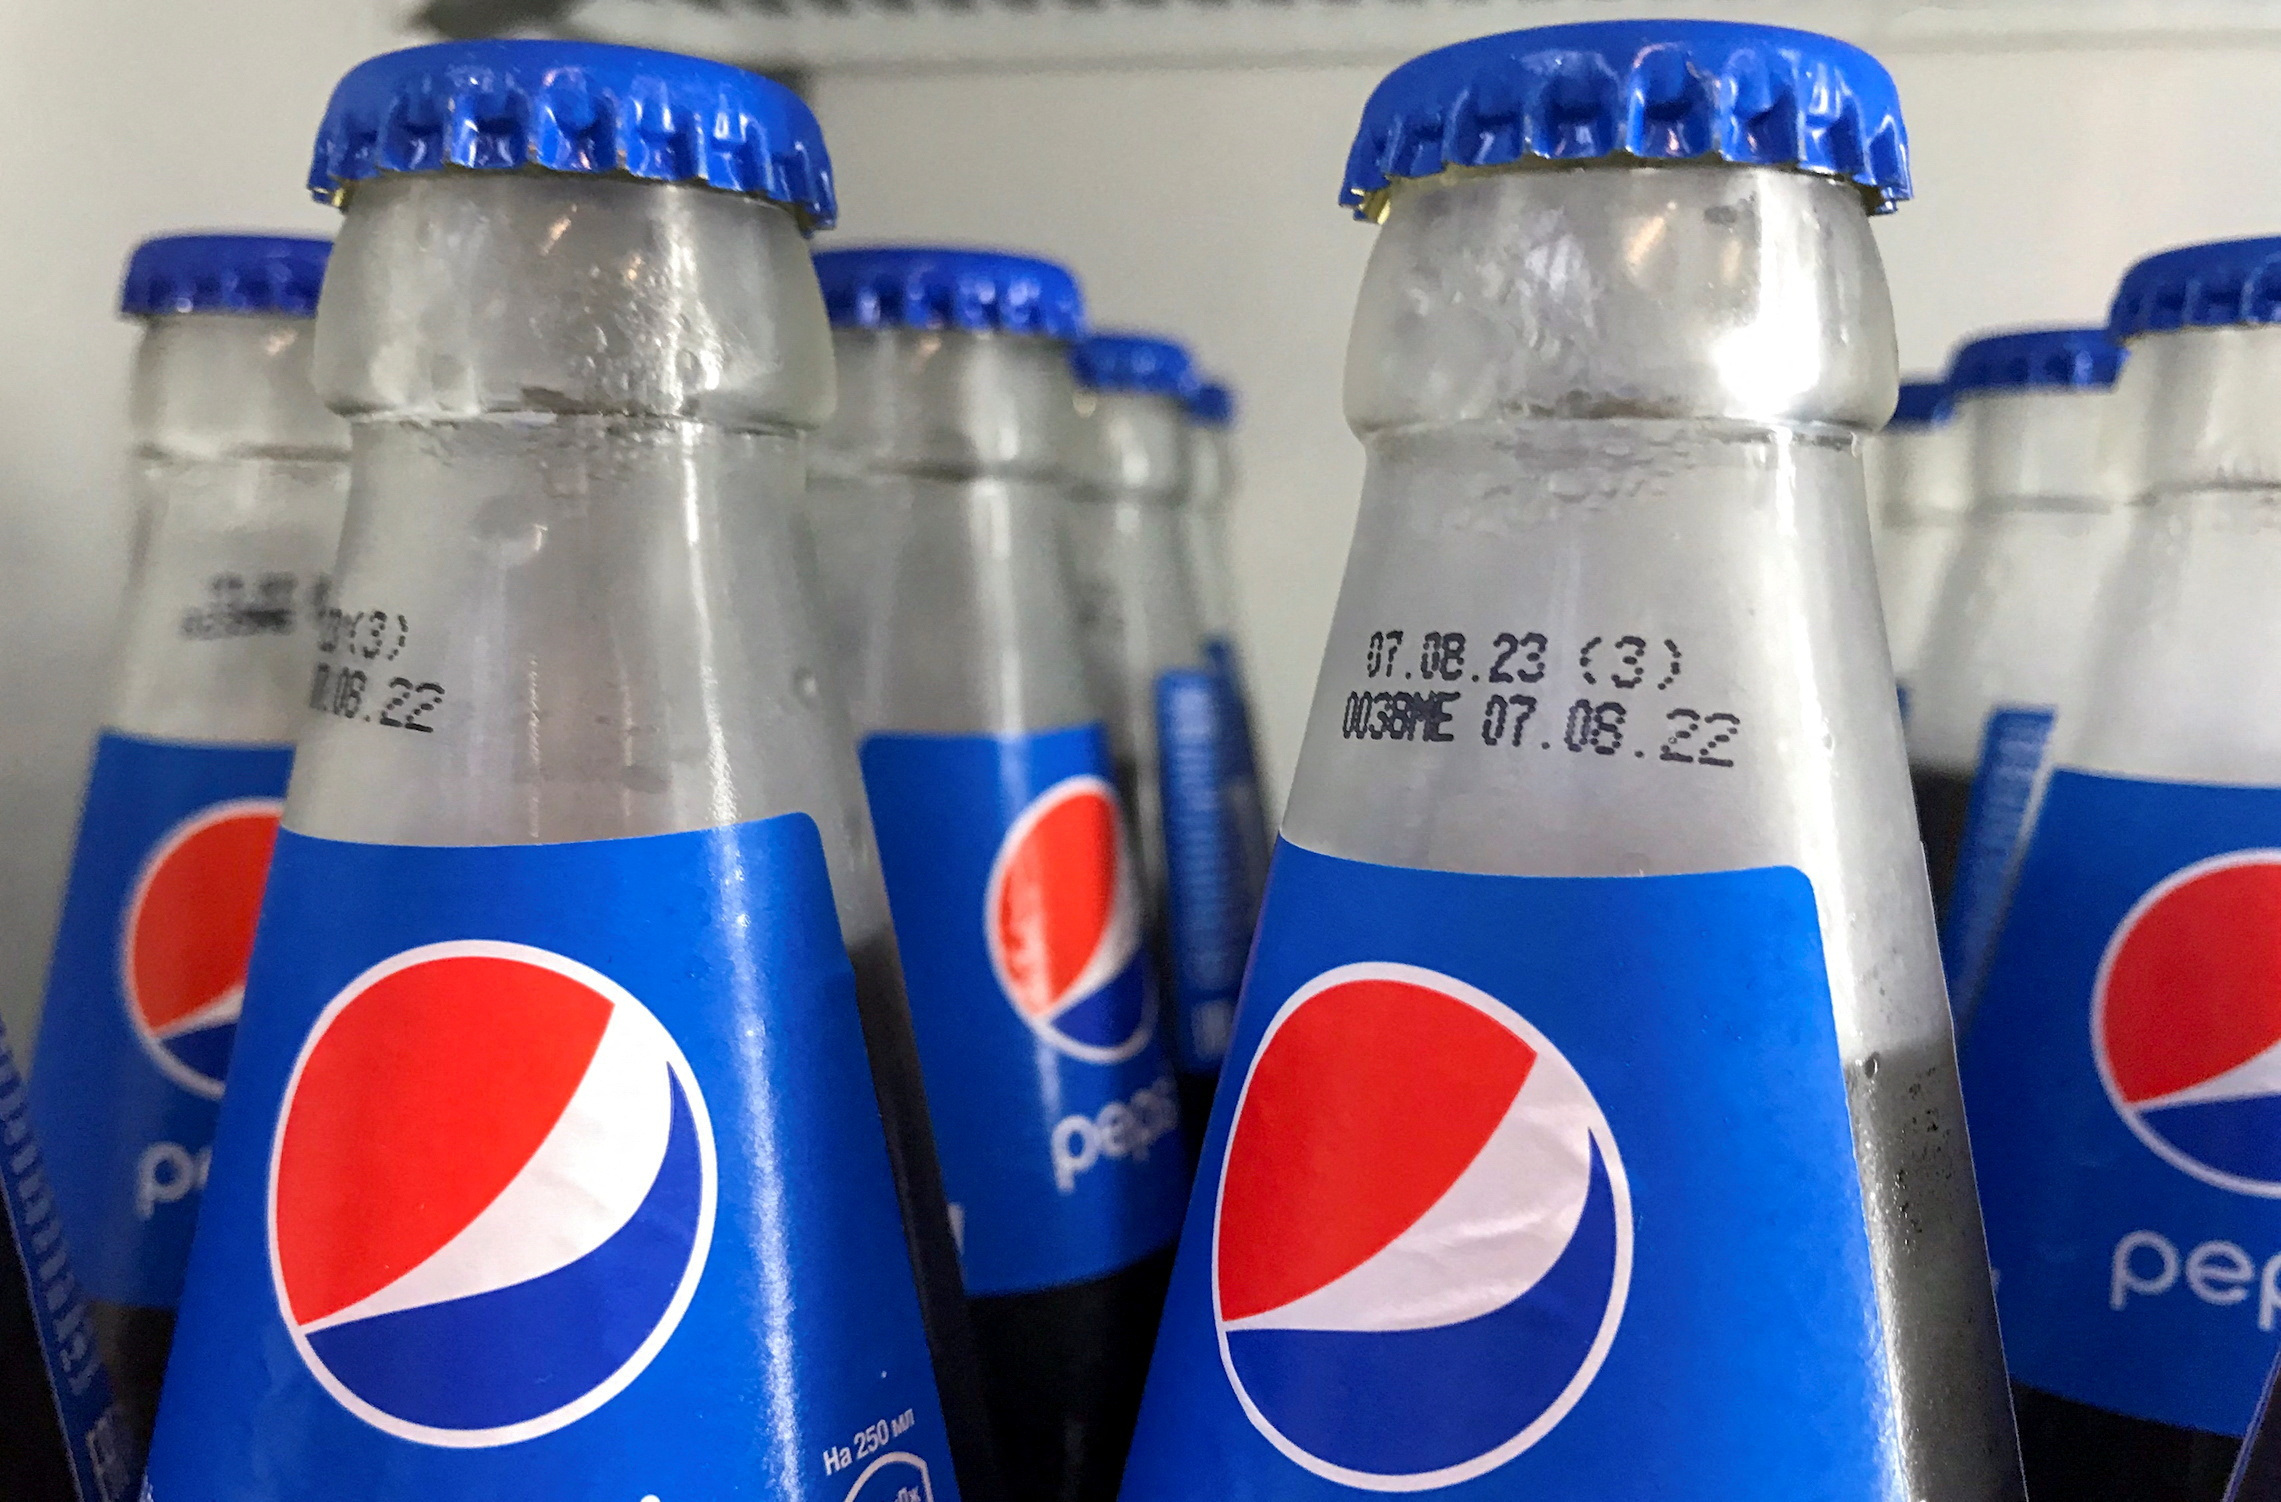 PepsiCo says it its Reuters | WHO warn change sweeteners on no to to aspartame portfolio set has plans as